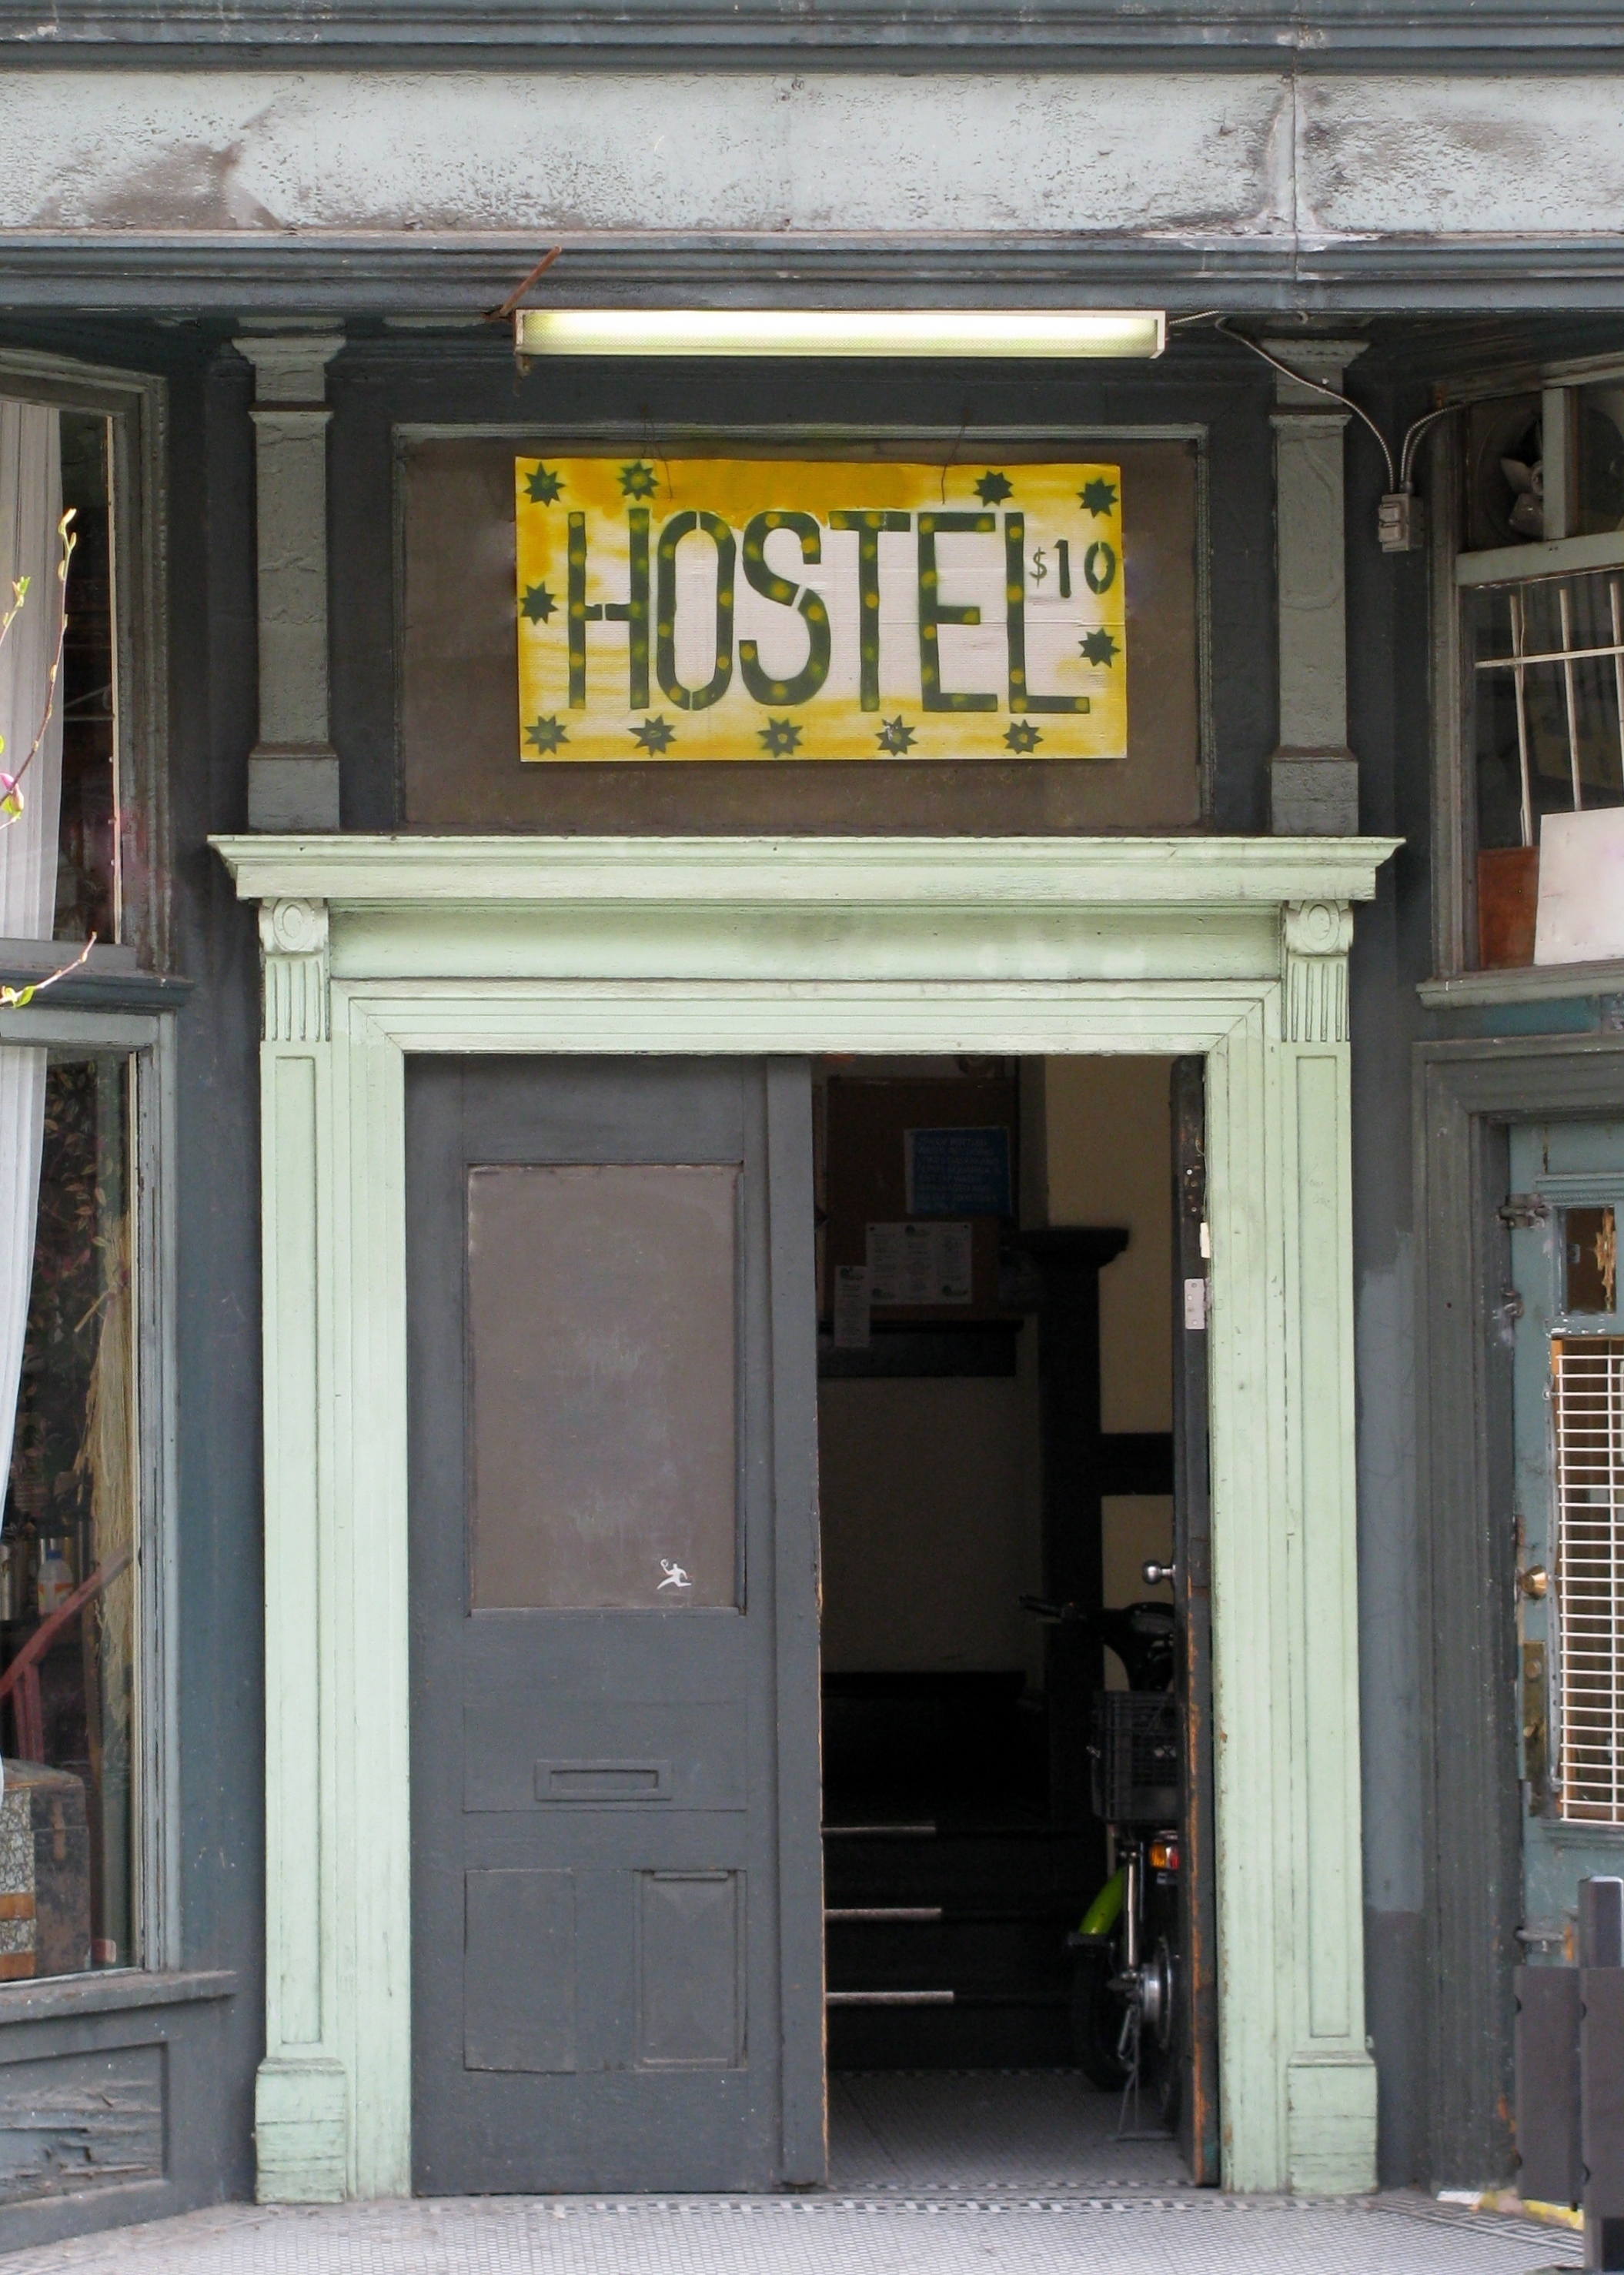 Hostel entrance | Source: Shutterstock.com